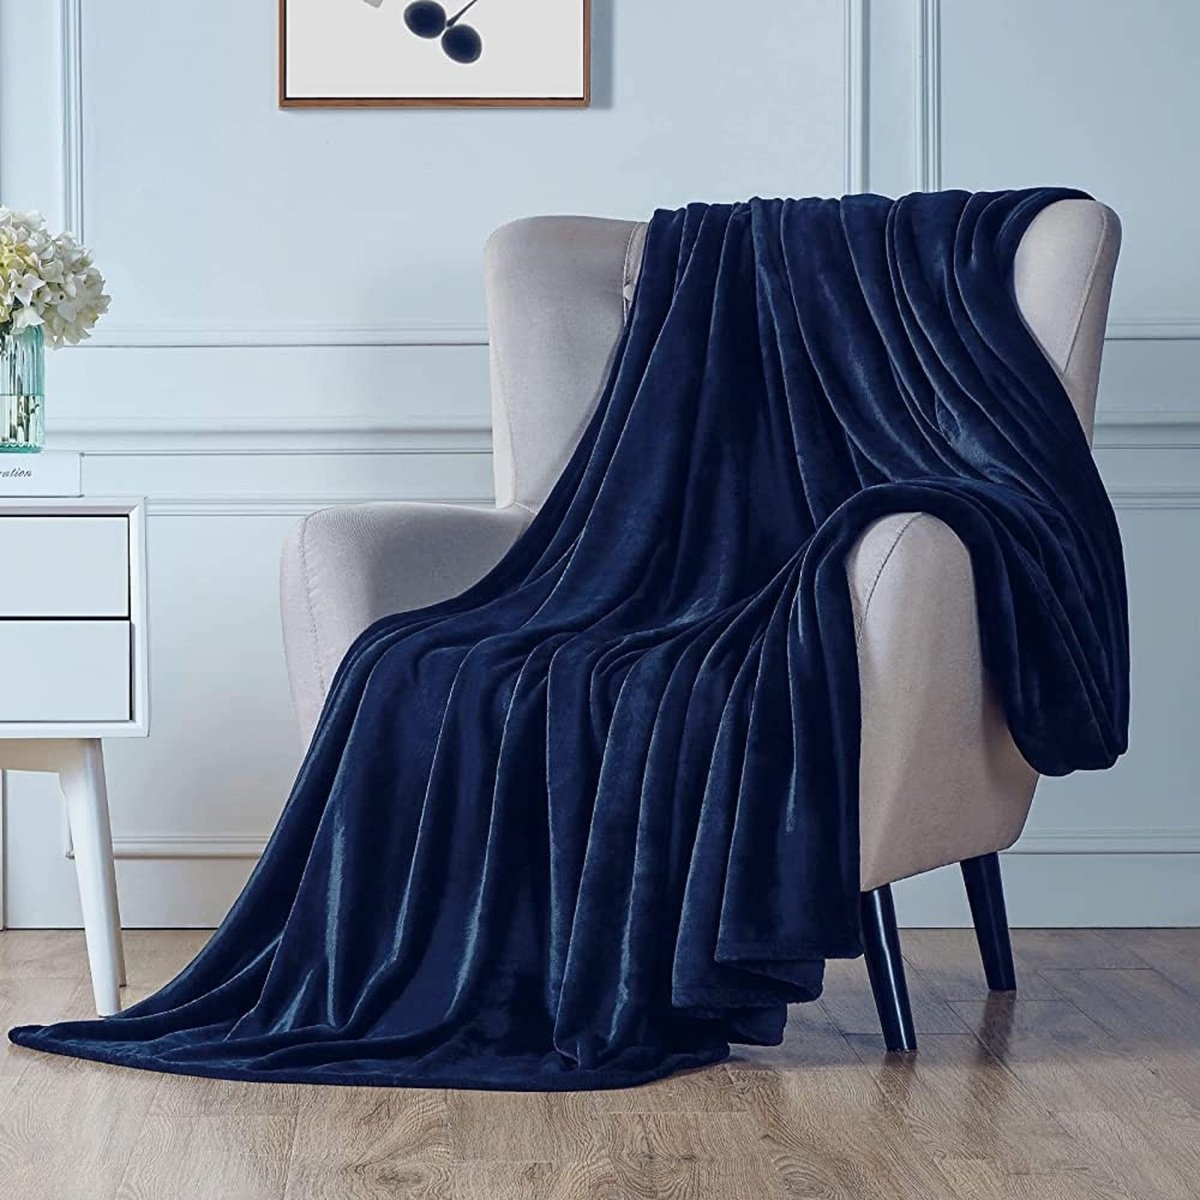 Maple Leaf Flannel Blanket 220x240cm Navy Blue